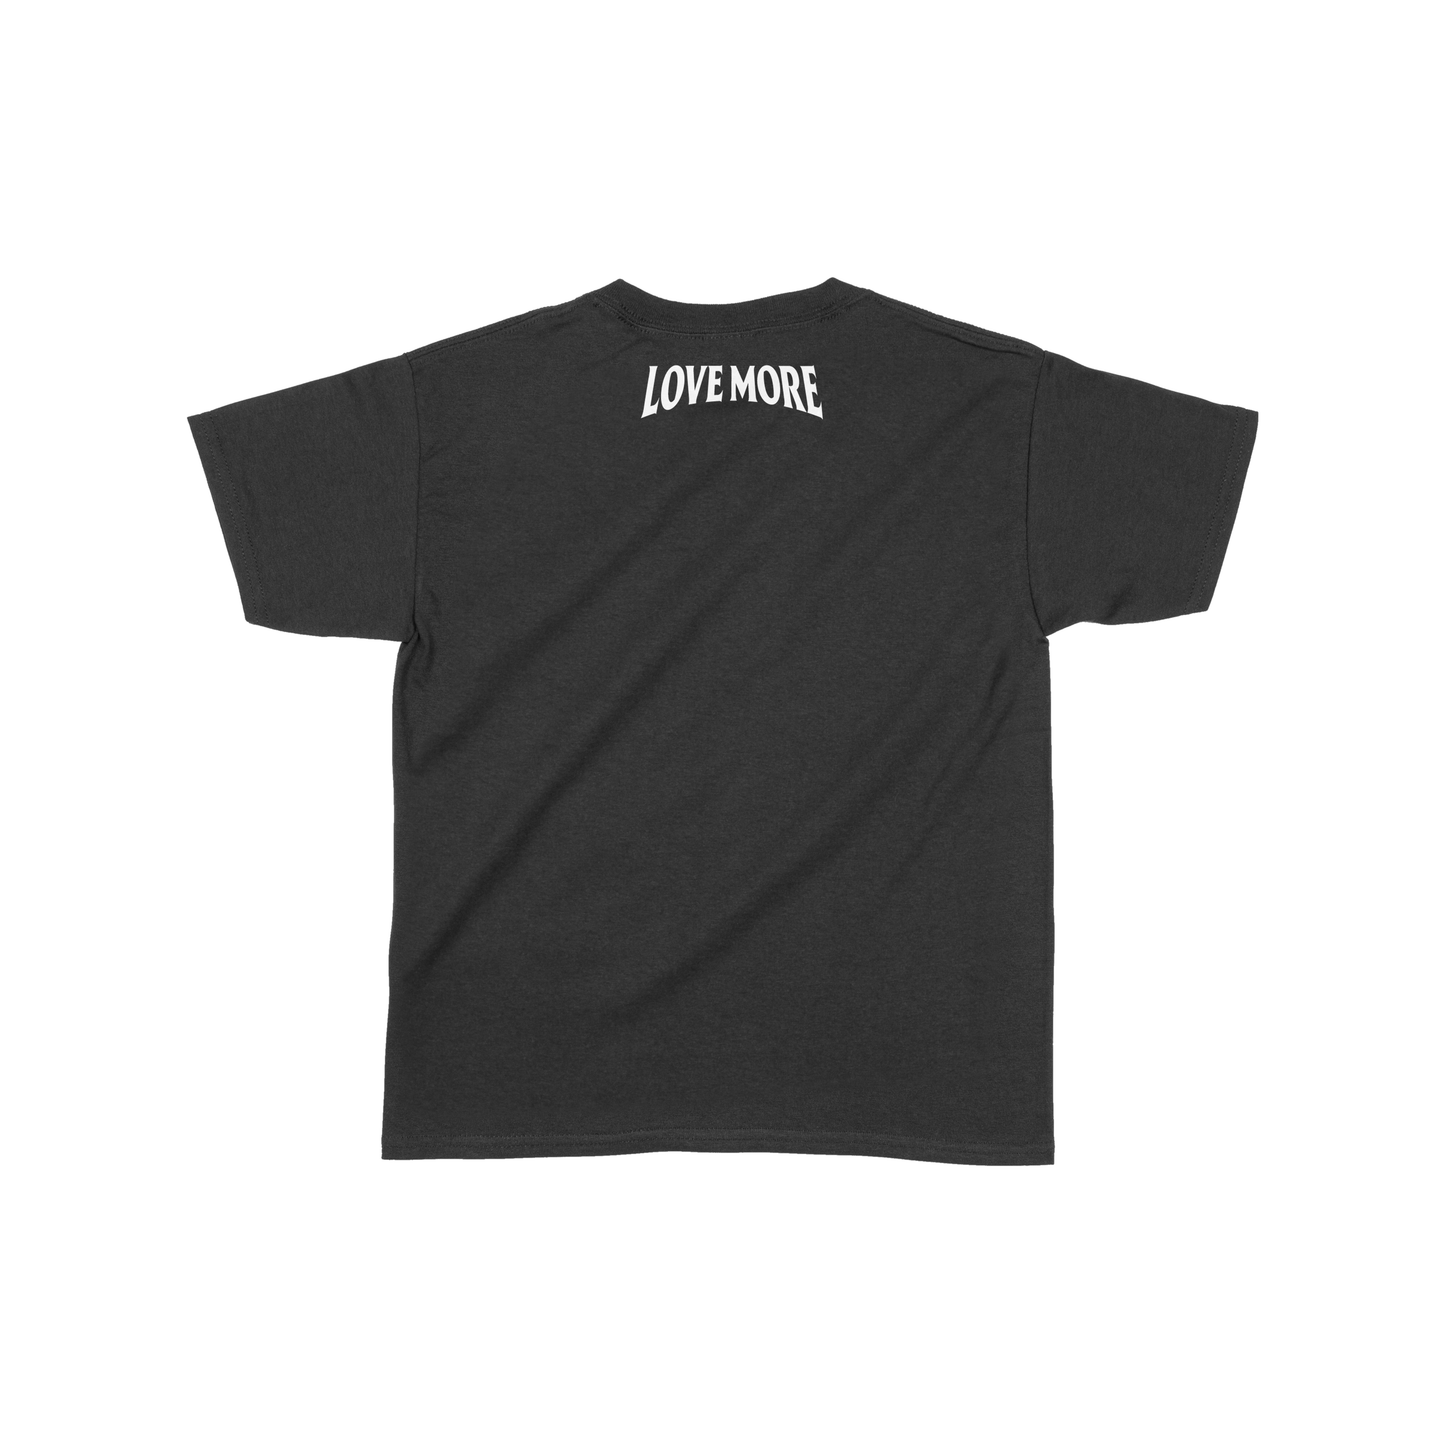 YOU MATTER Youth Short-Sleeve Unisex T-Shirt - BLACK